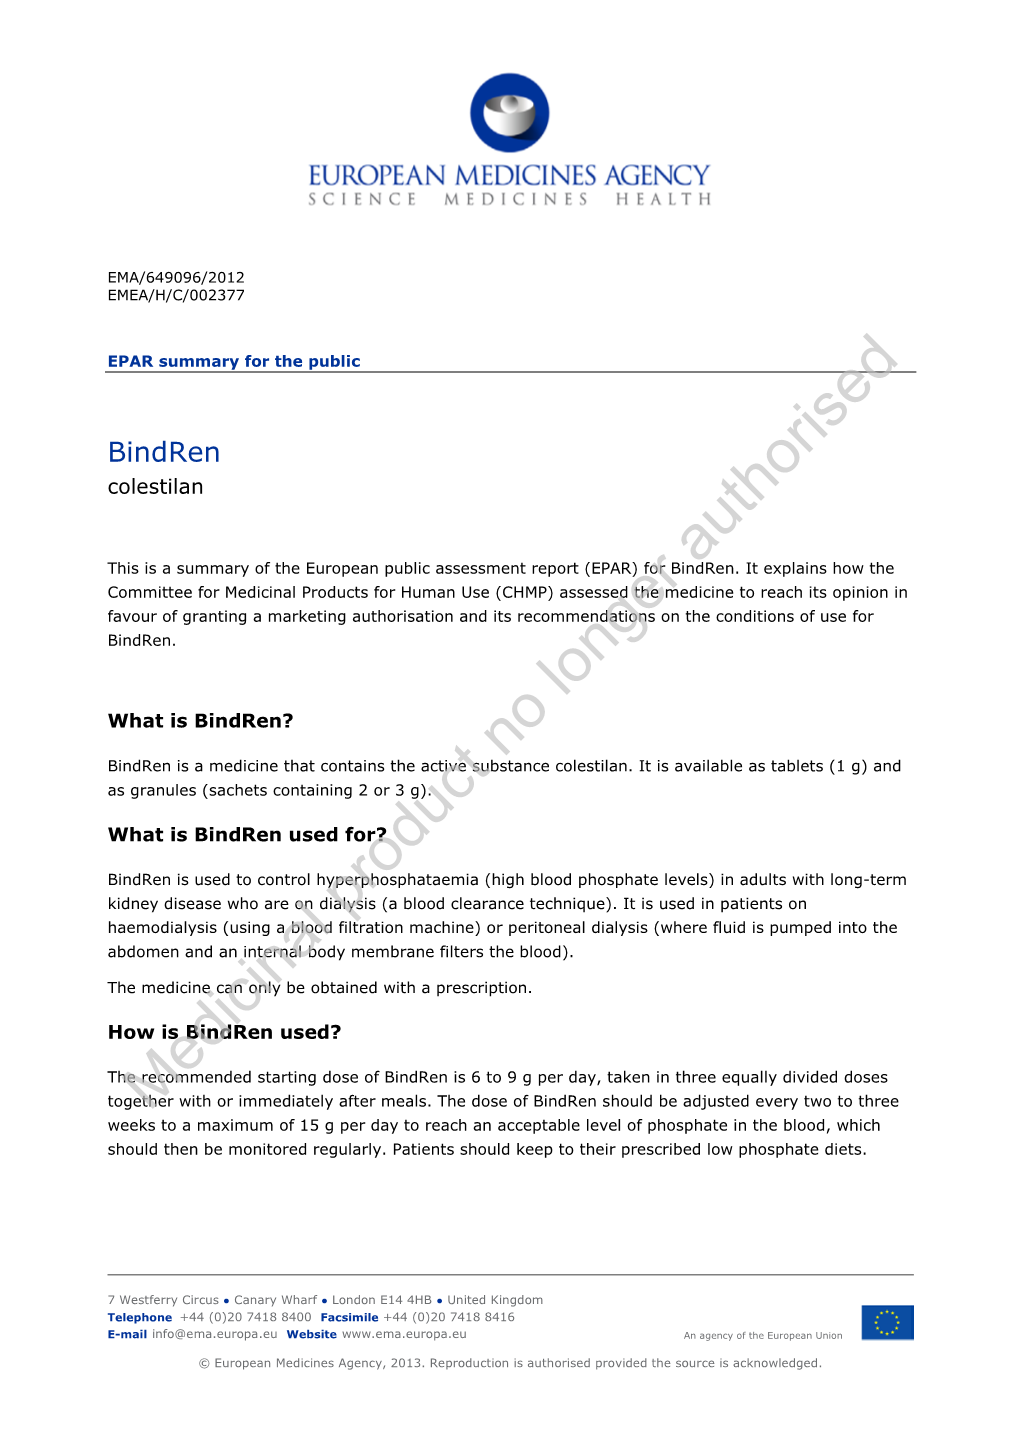 Bindren, INN-Colestilan